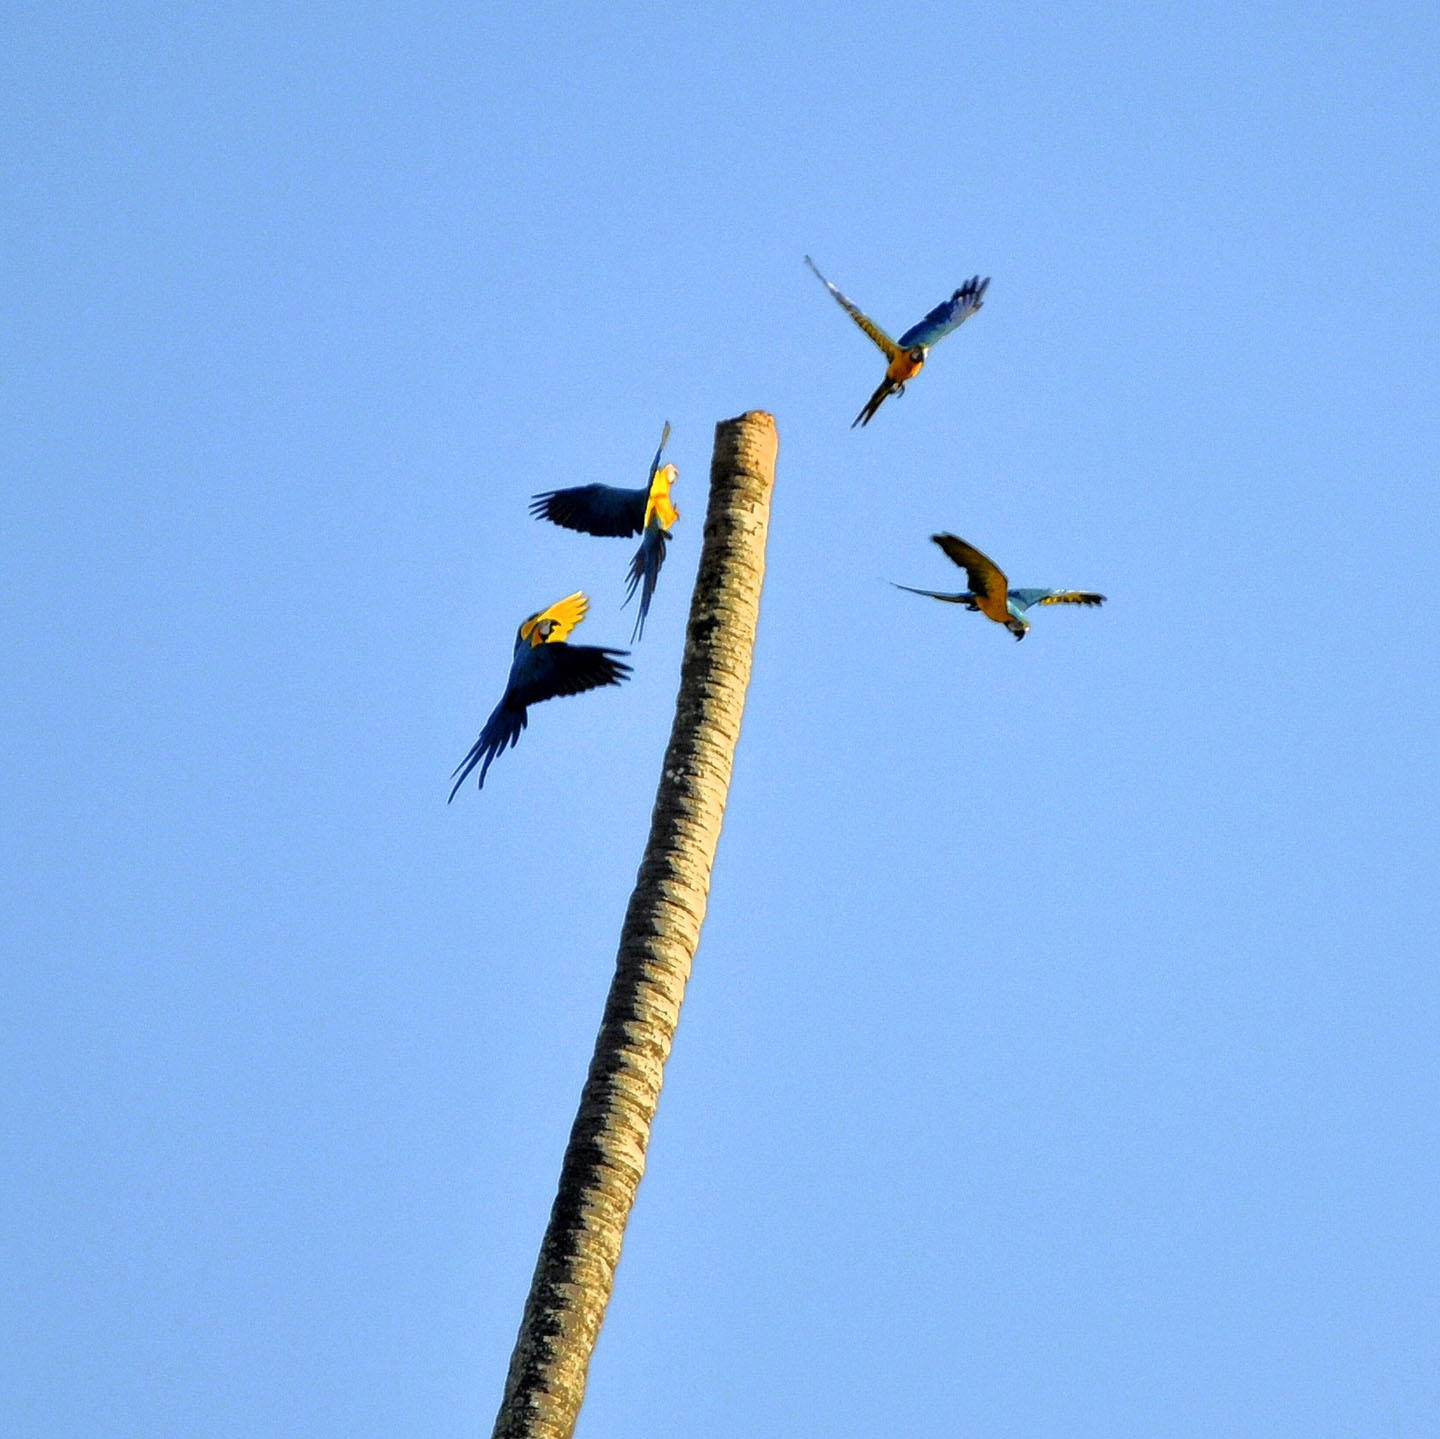 macaws flying through air